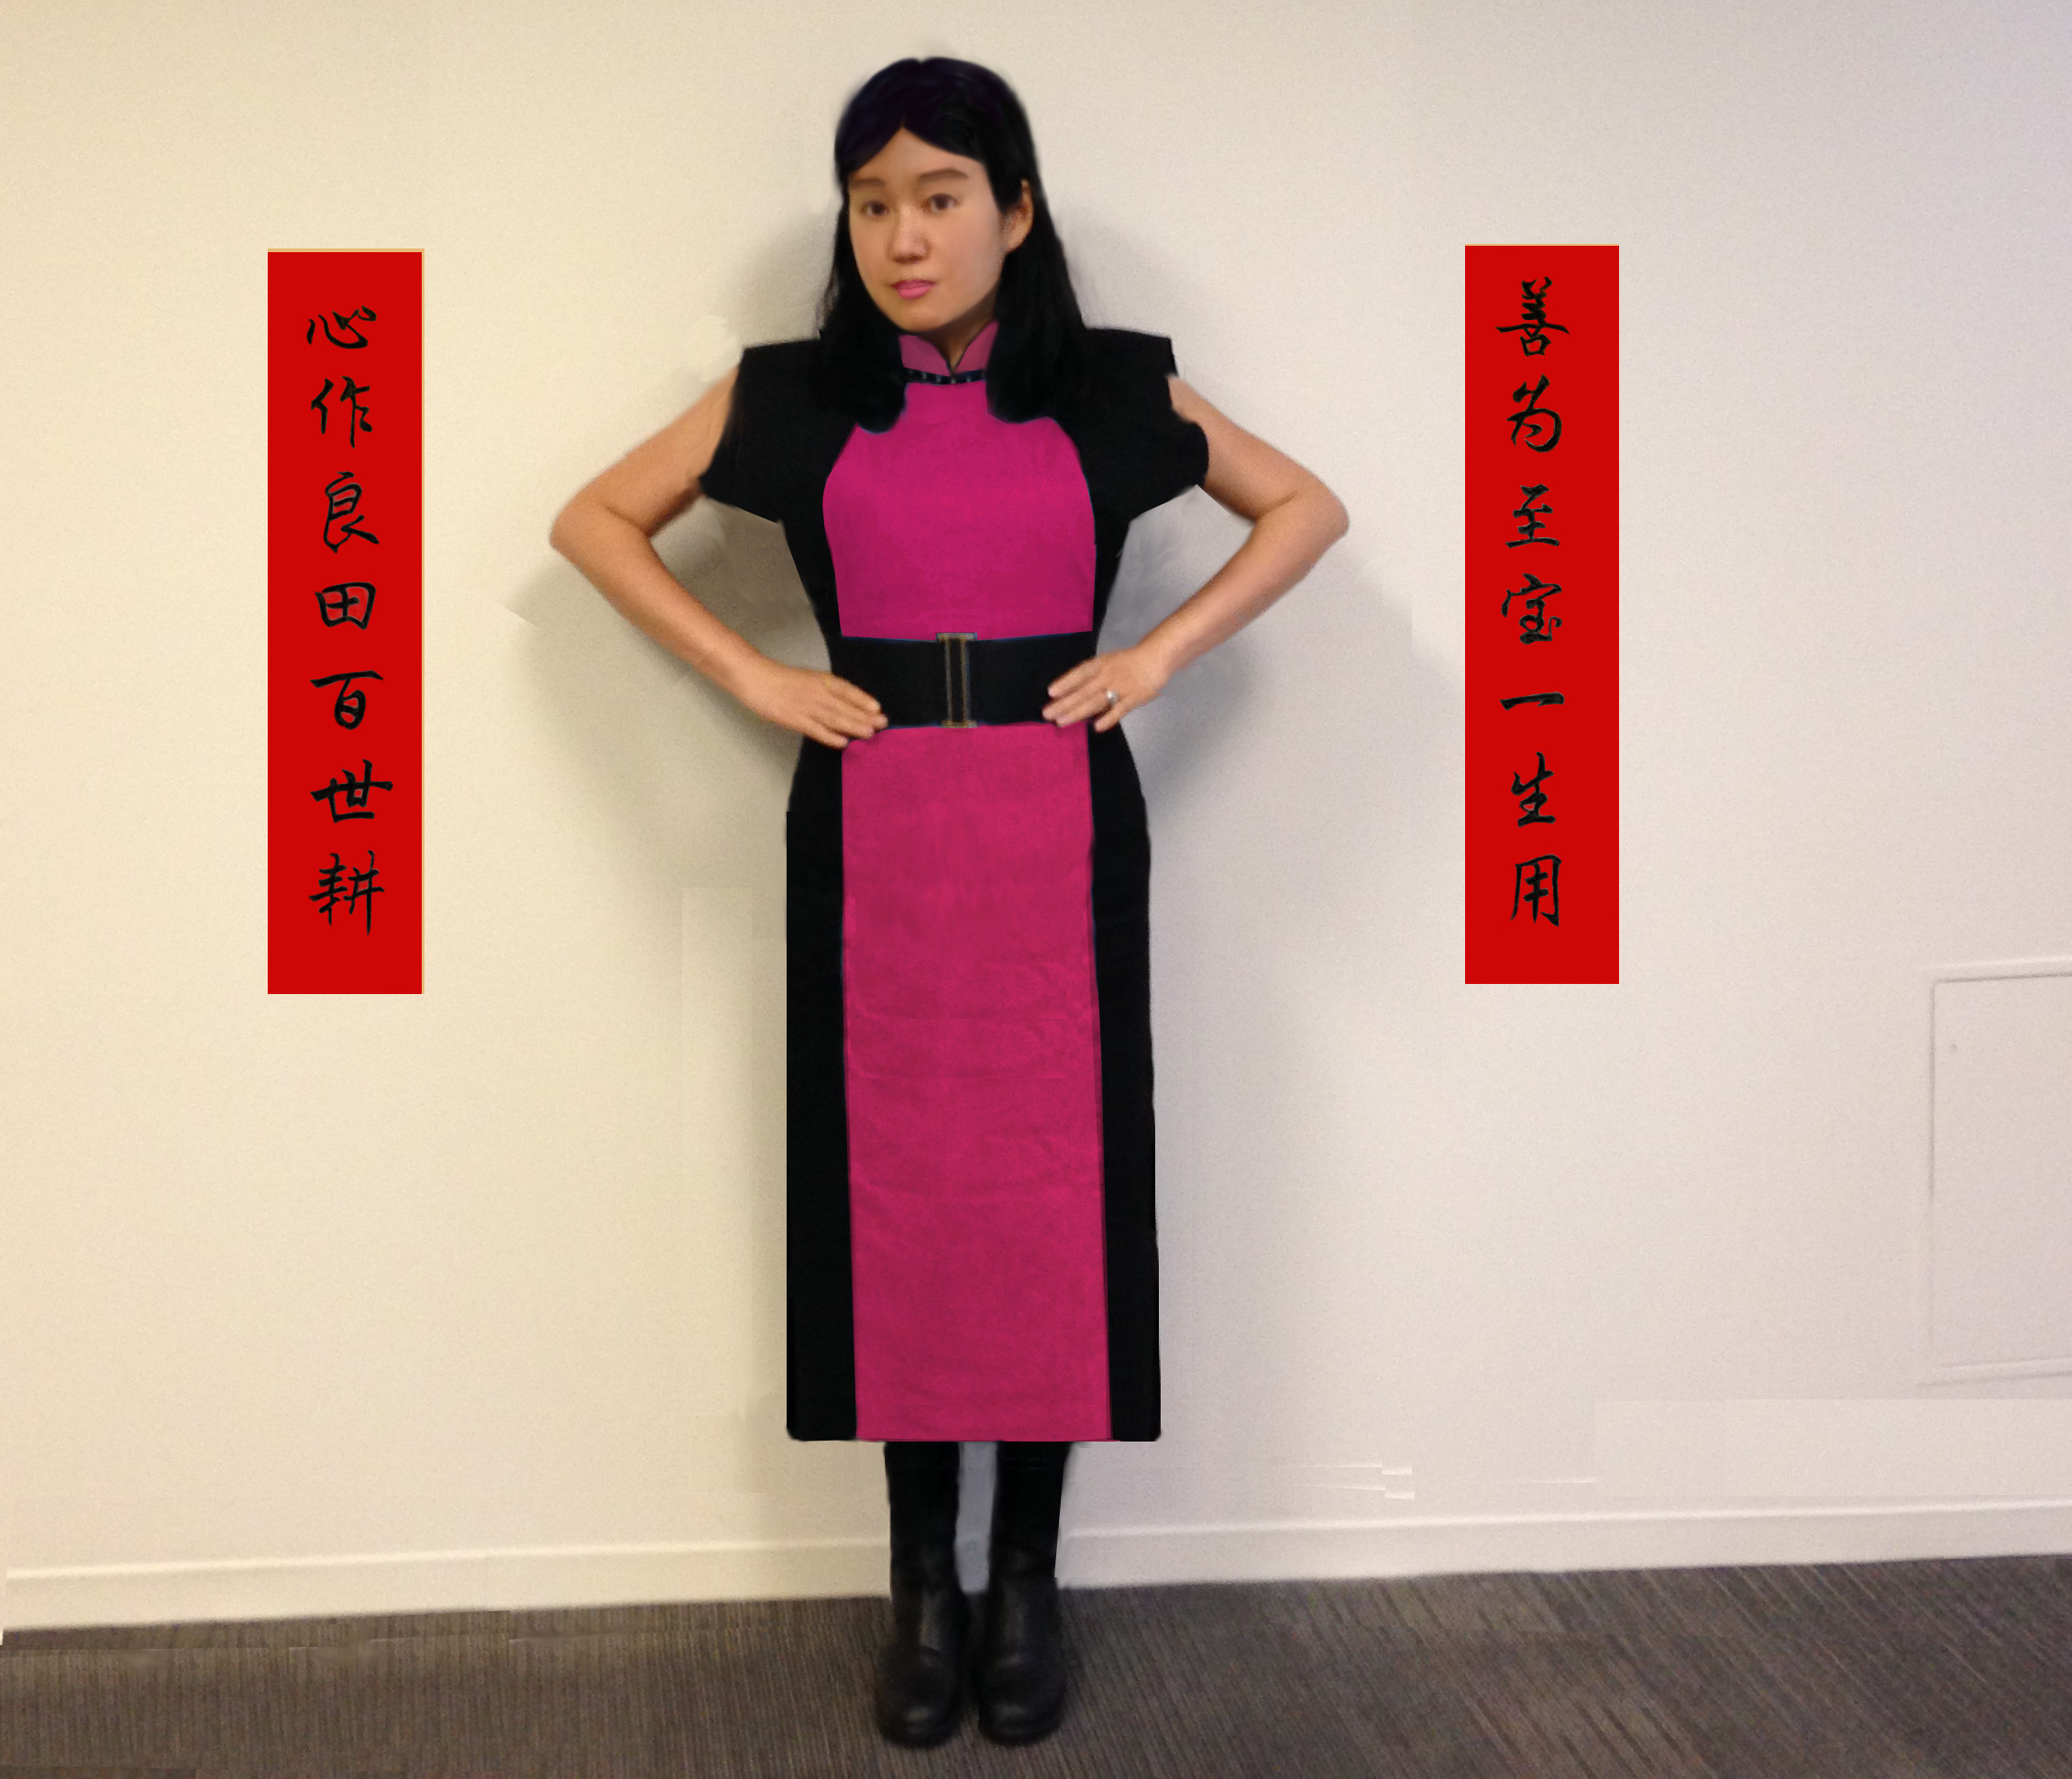 A modernized Mandarin dress